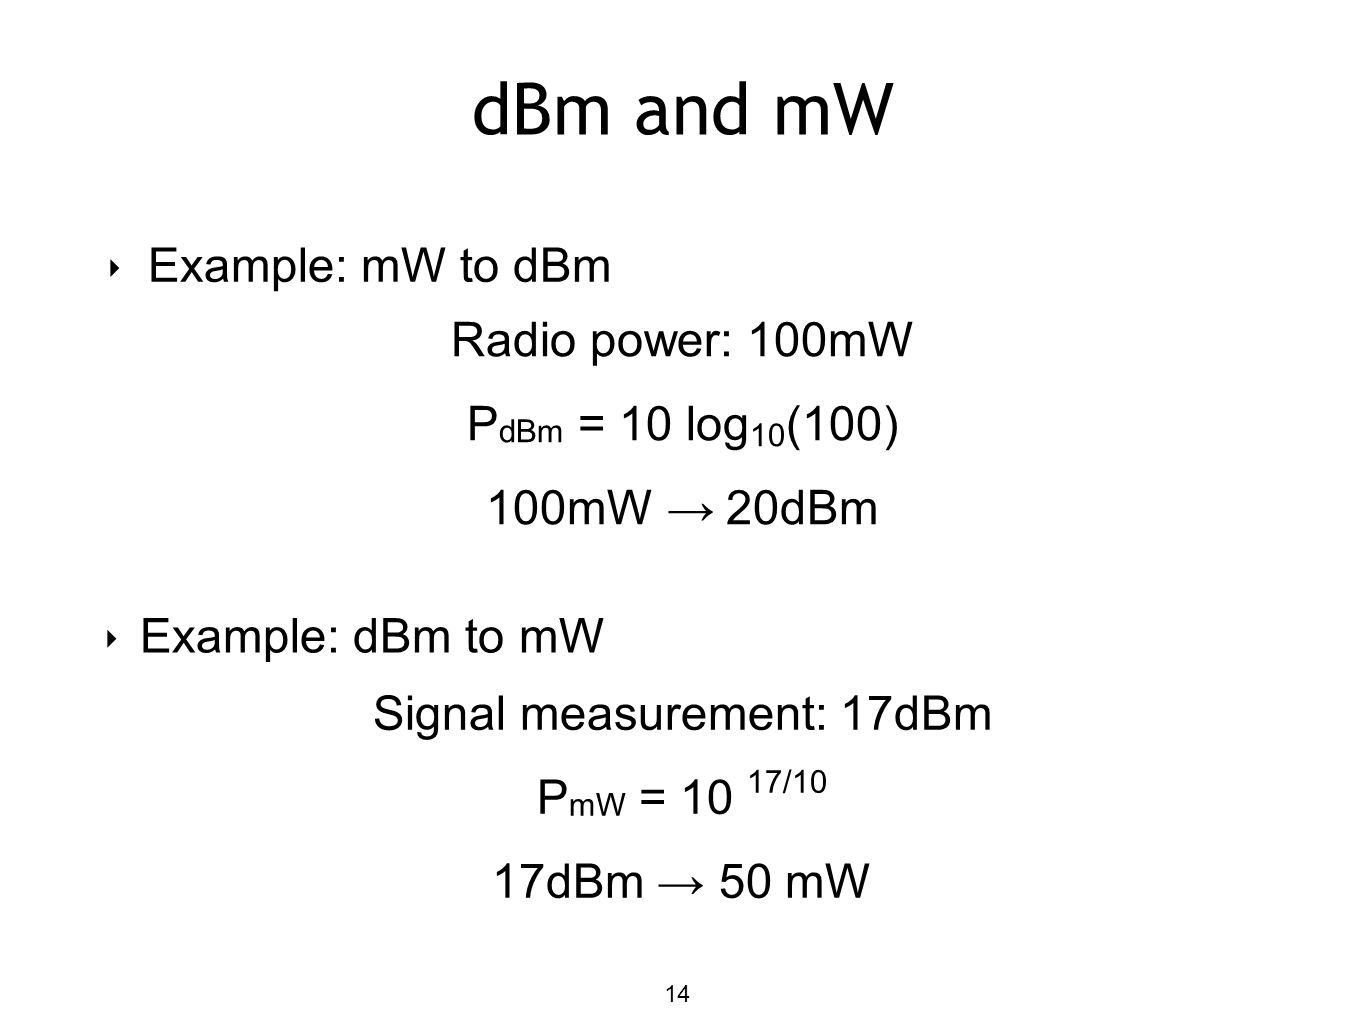 Signal measurement: 17dBm